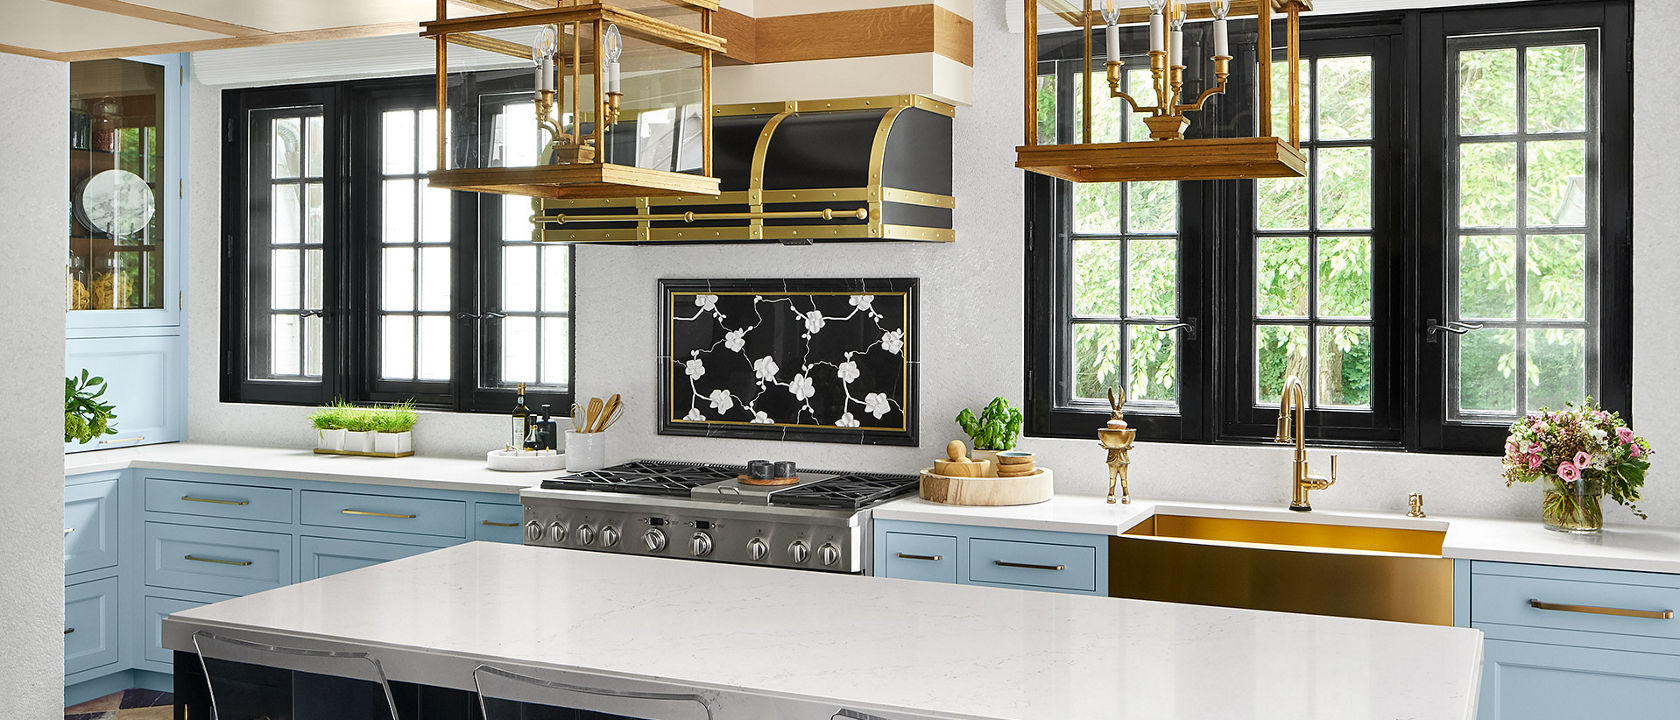 Cambria Colton Matte quartz kitchen countertops featured in Lake Forest Showhouse tour